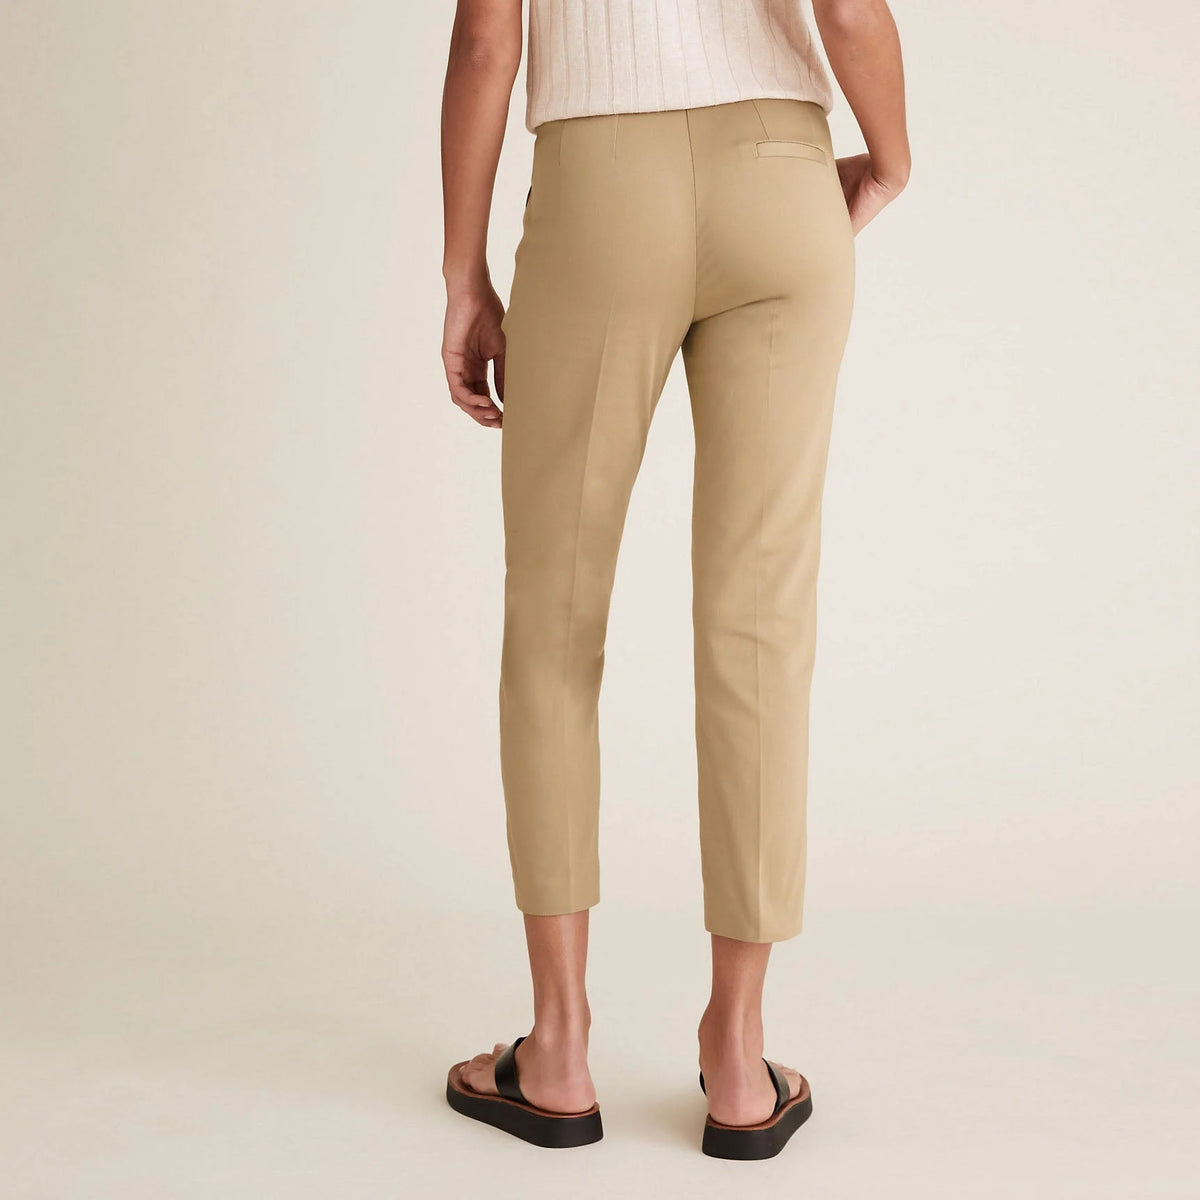 M&S Mia Slim Fit 7/8 Length Trousers